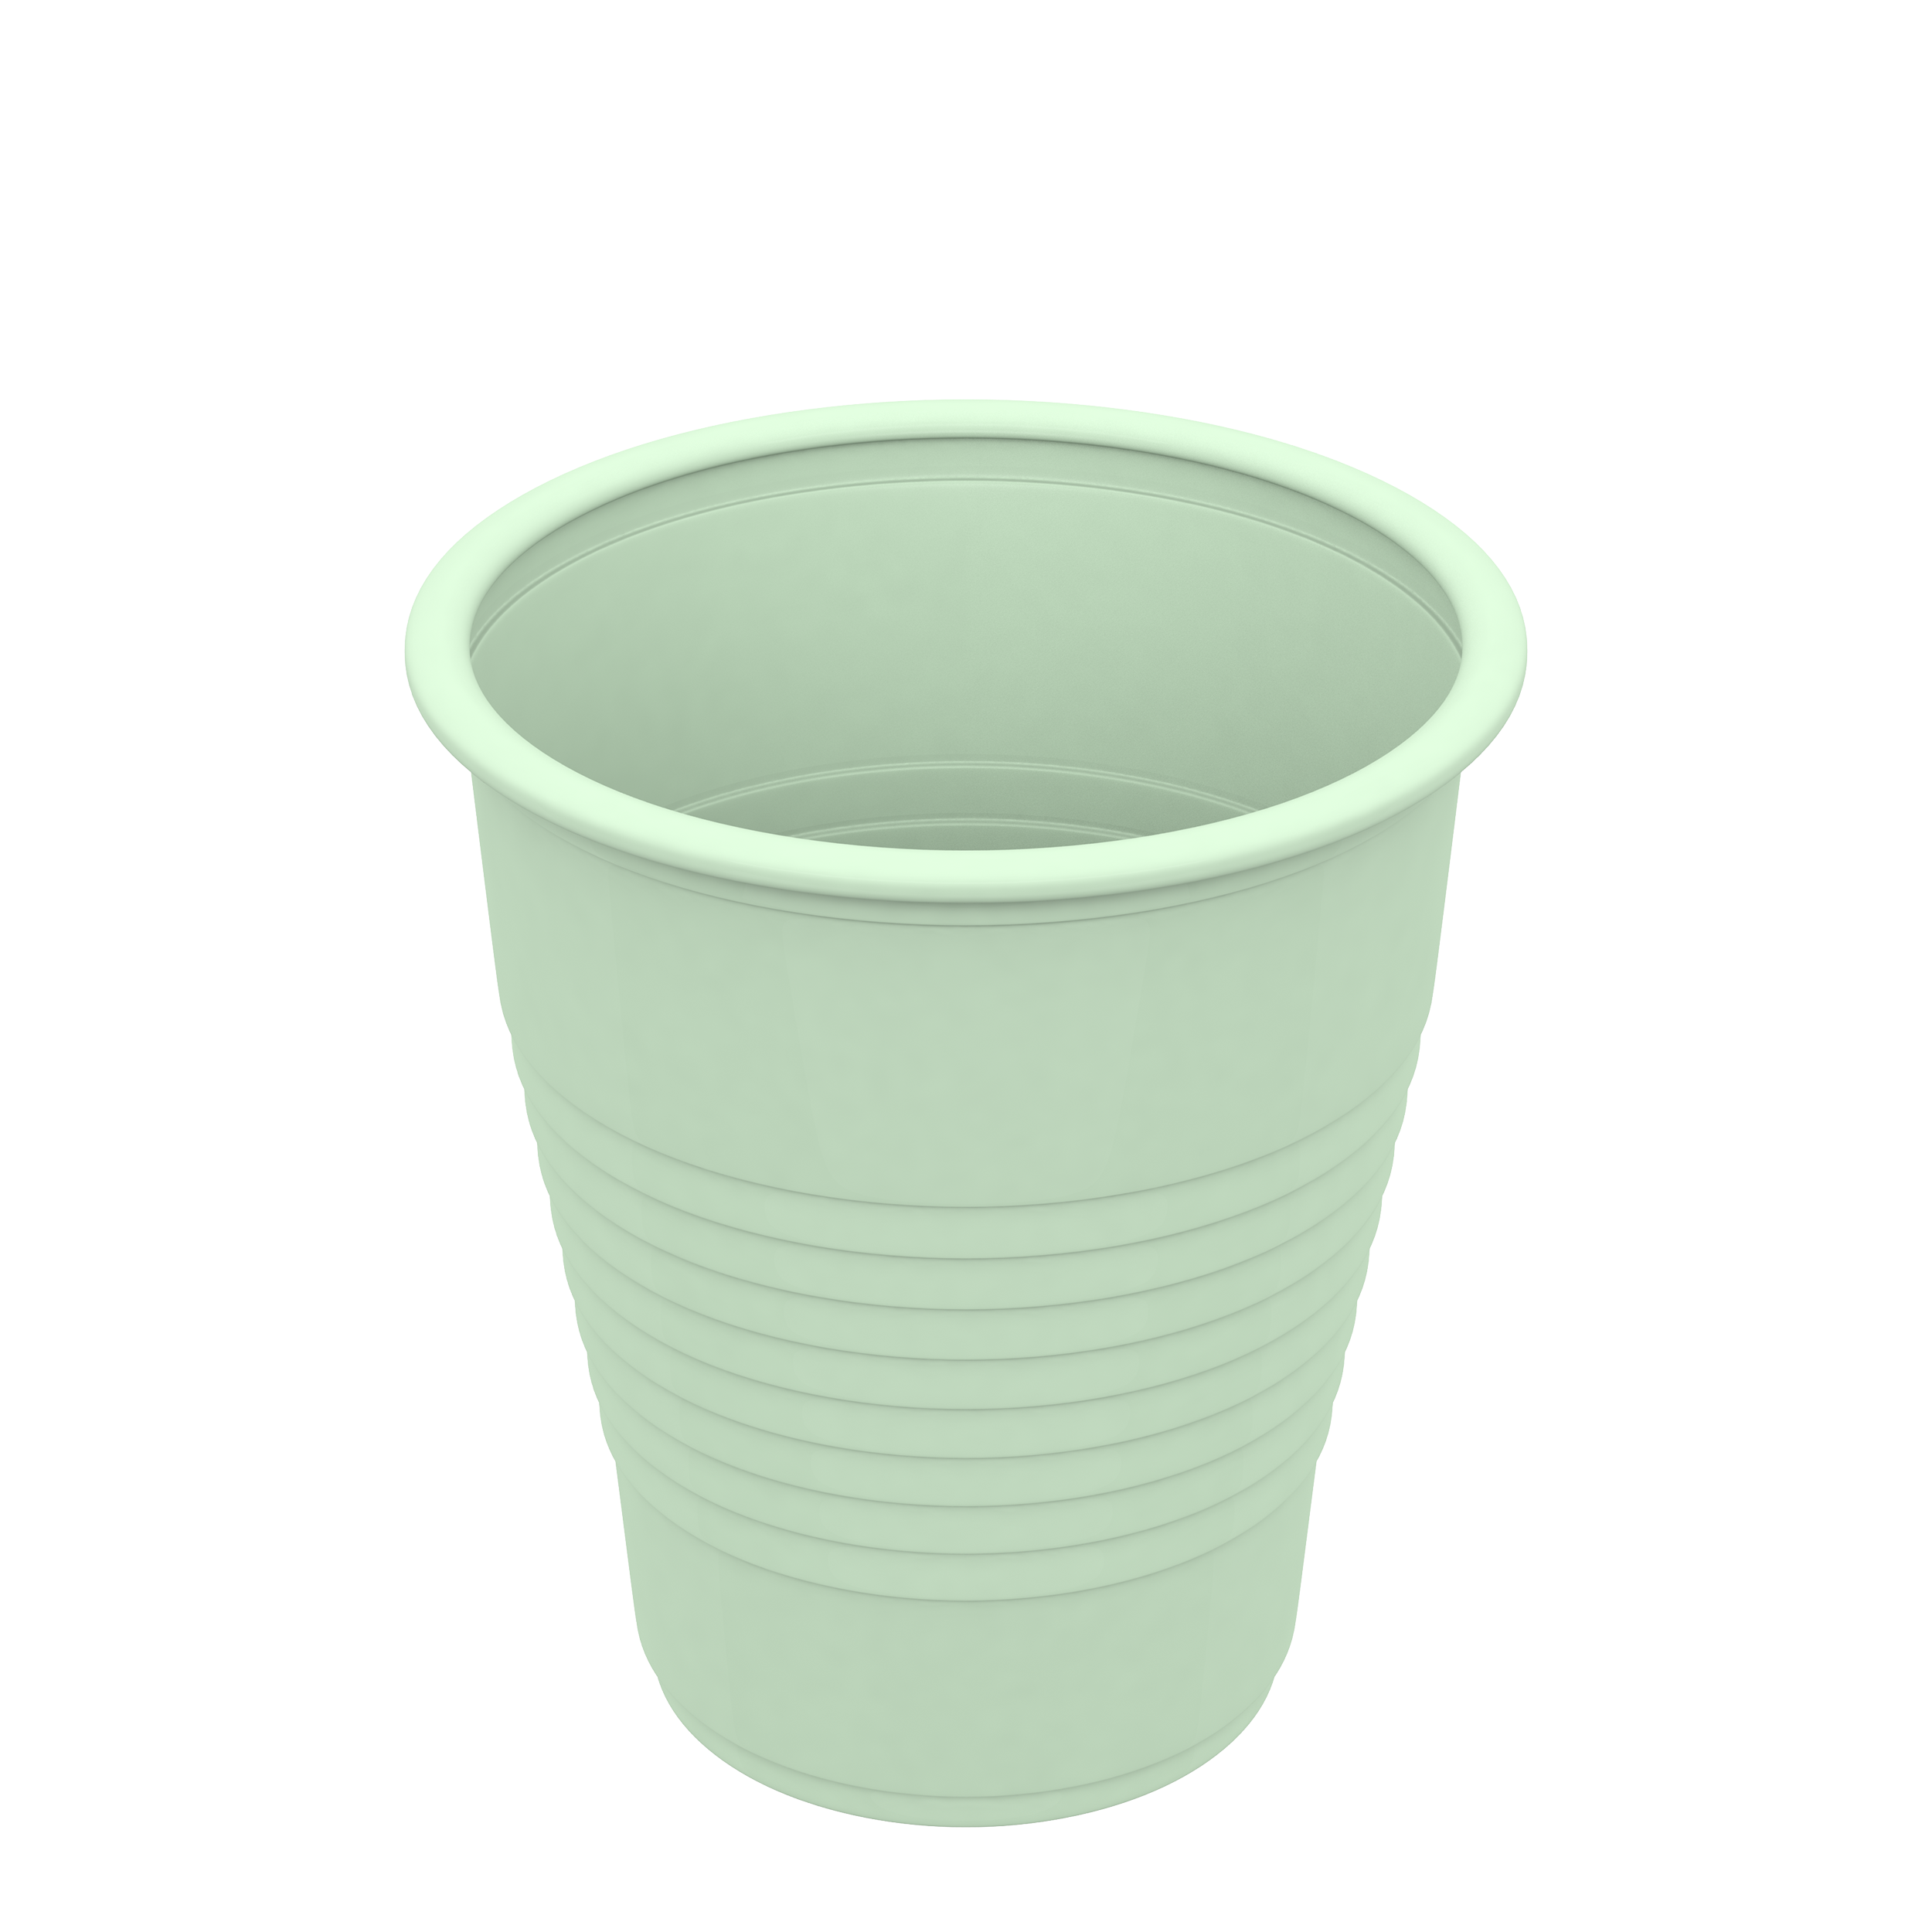 Drinking Cups - 5 oz. Mint Green